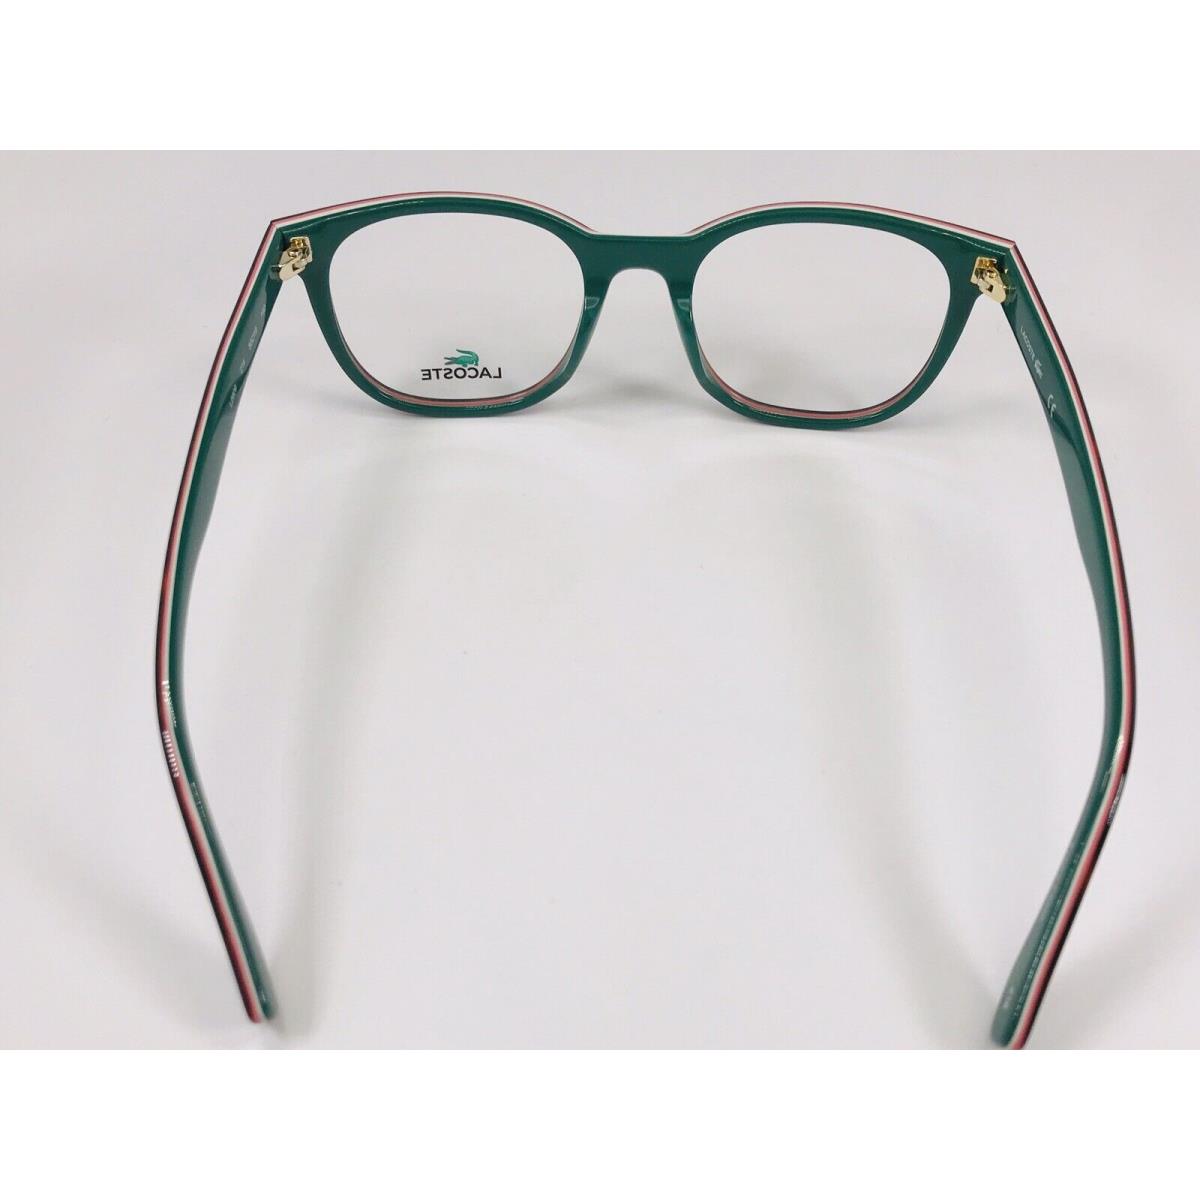 Lacoste eyeglasses  - 214 , Dark Havana & Multi Colored Layers Frame 7